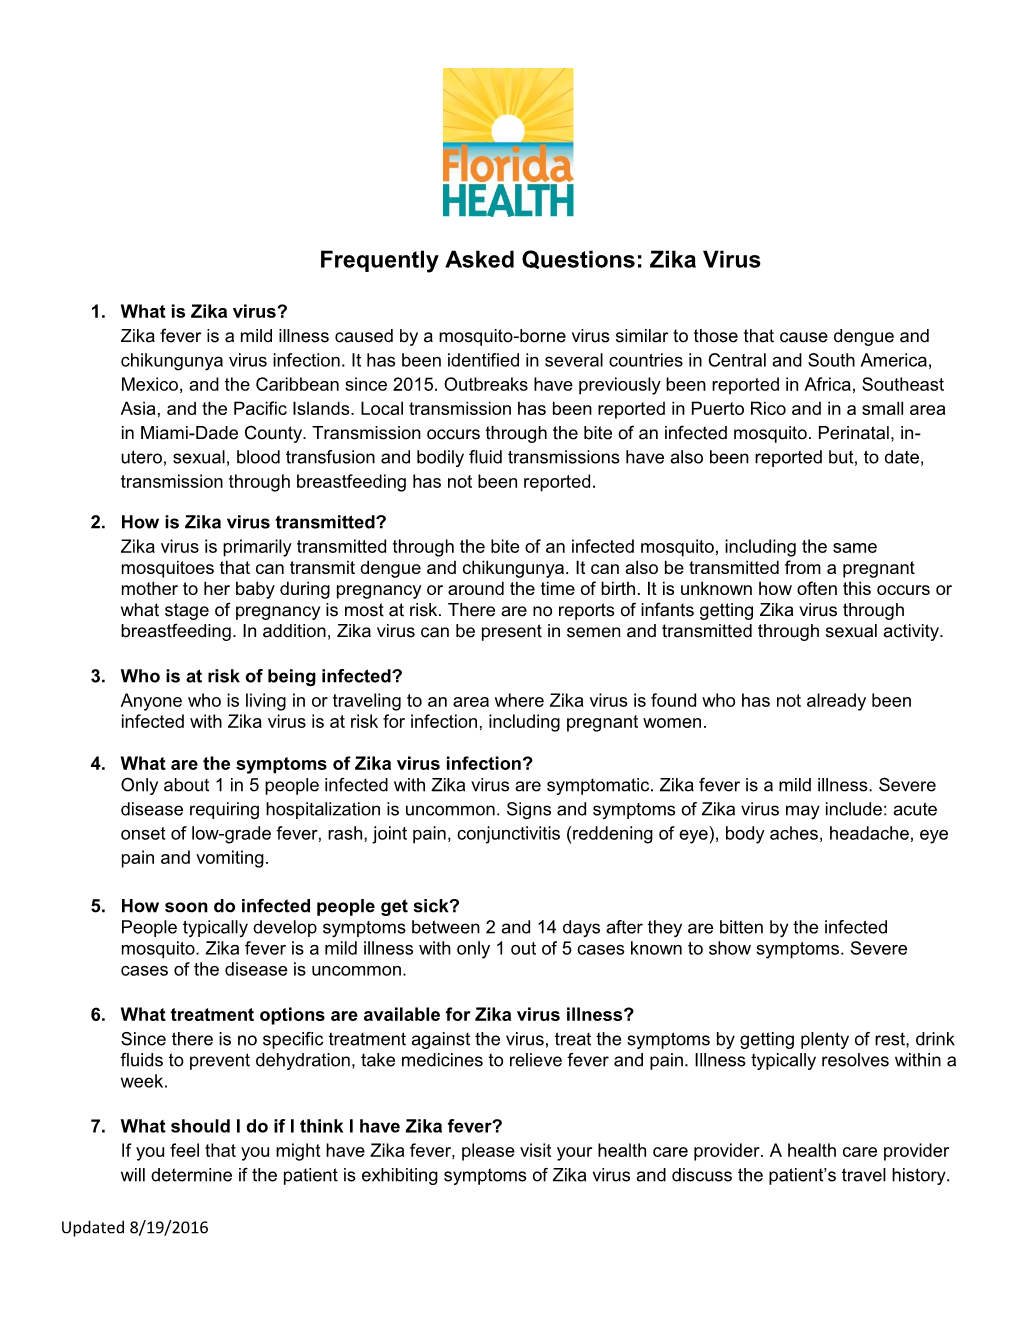 Florida Department of Health, Zika